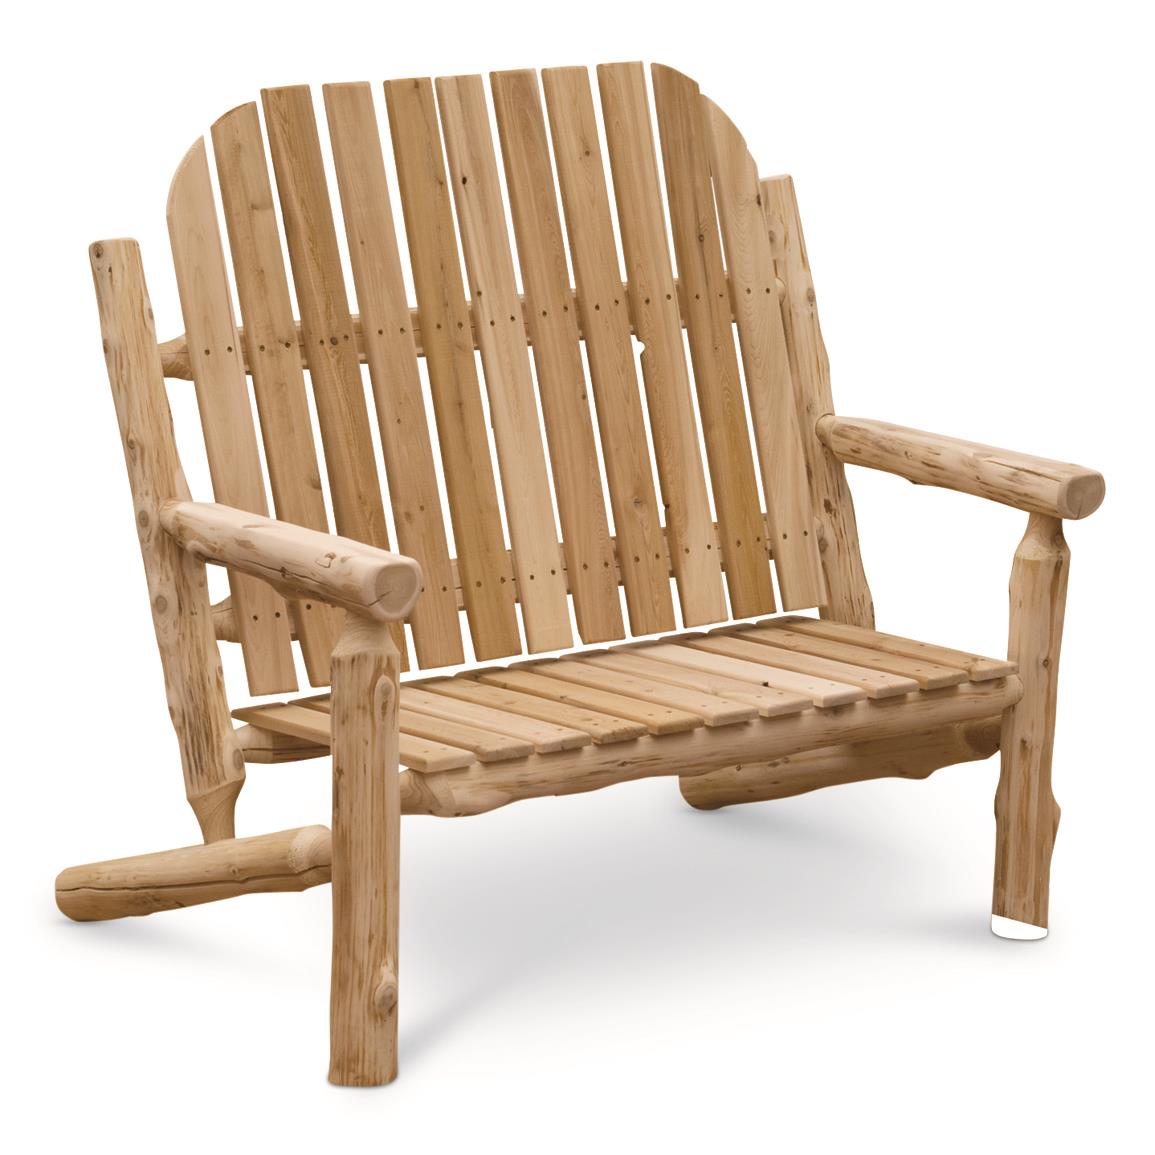 Fireside Lodge Outdoor Cedar 2-Person Adirondack Chair